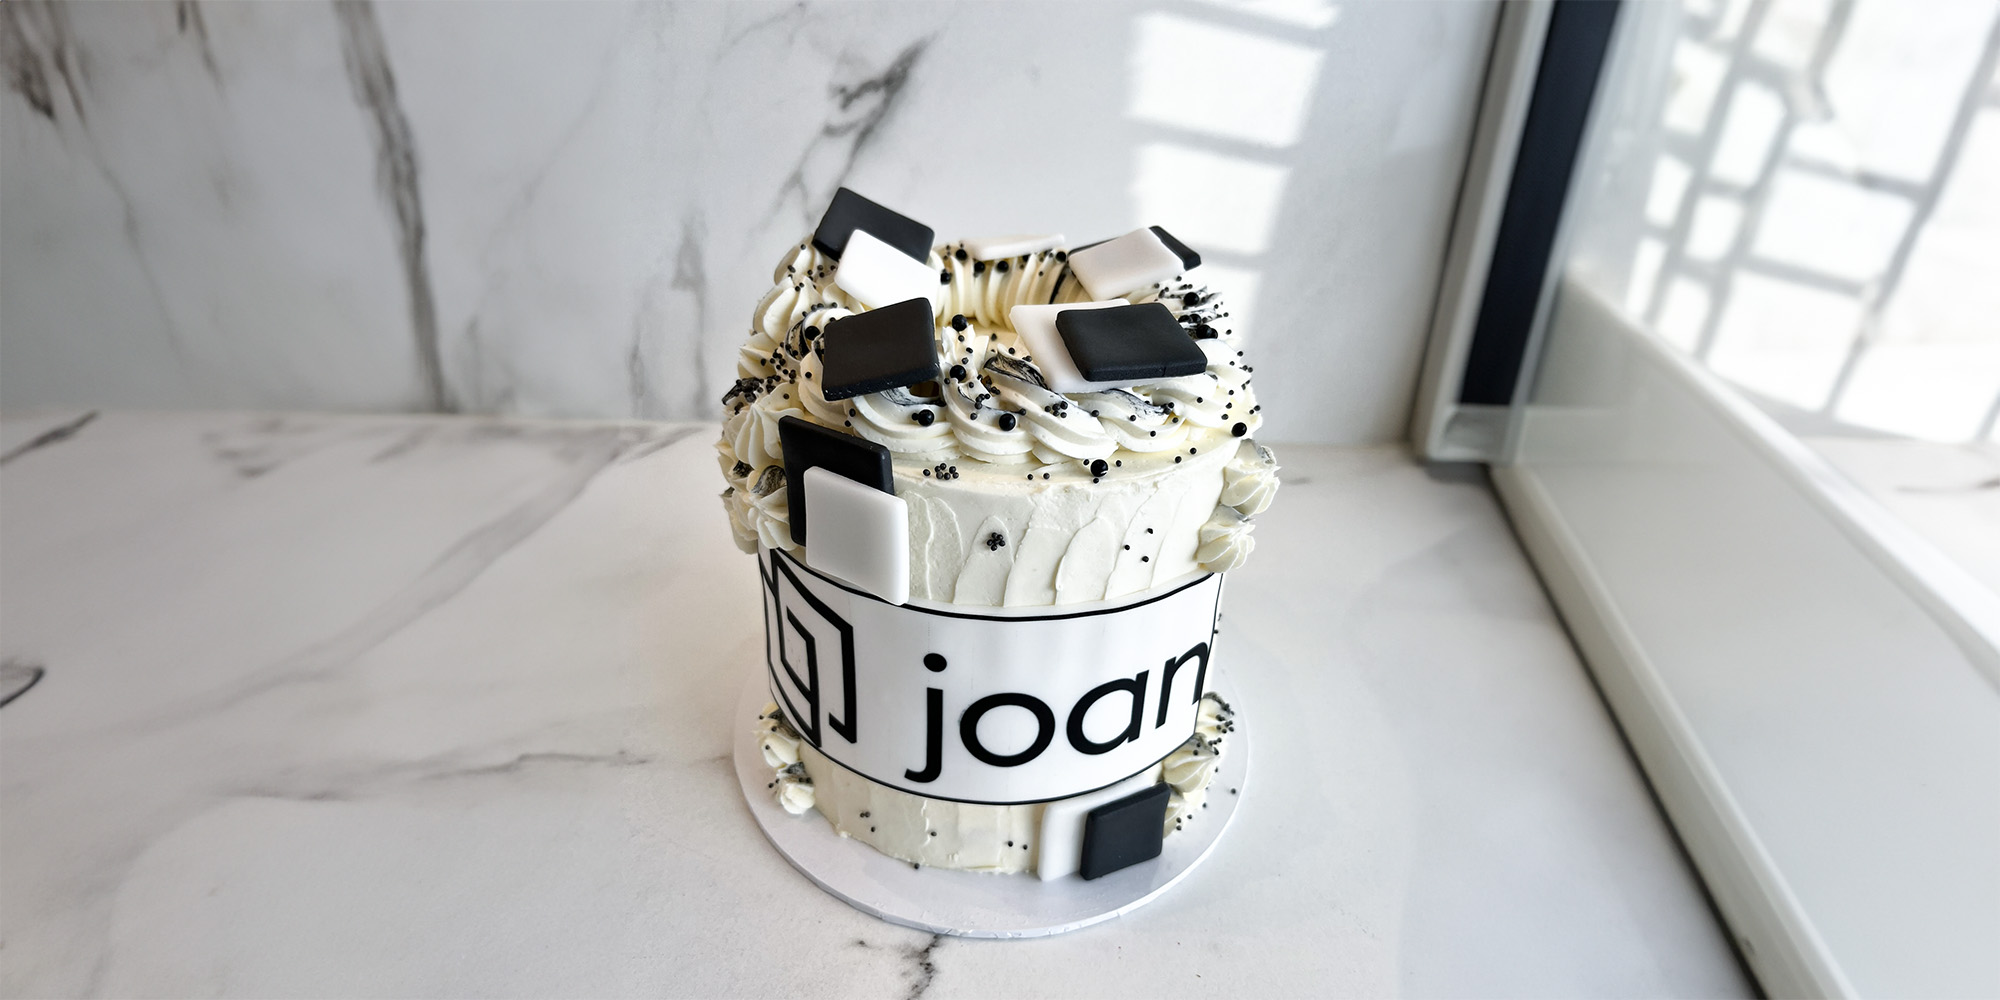 Joan cake_1